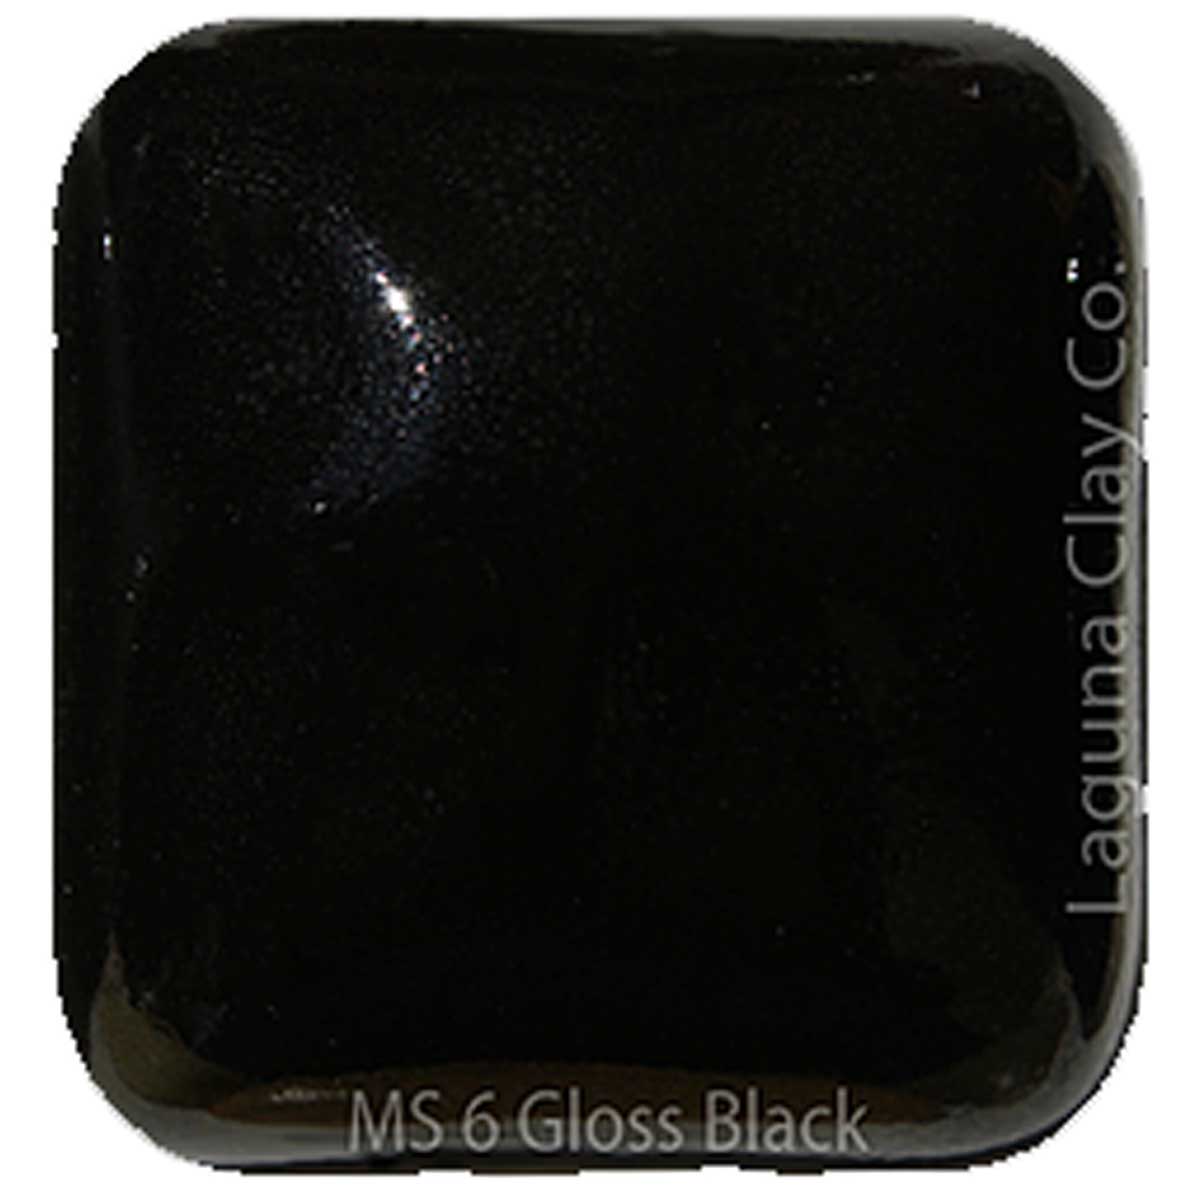 Laguna MS6 Gloss Black Medium Fire Glaze